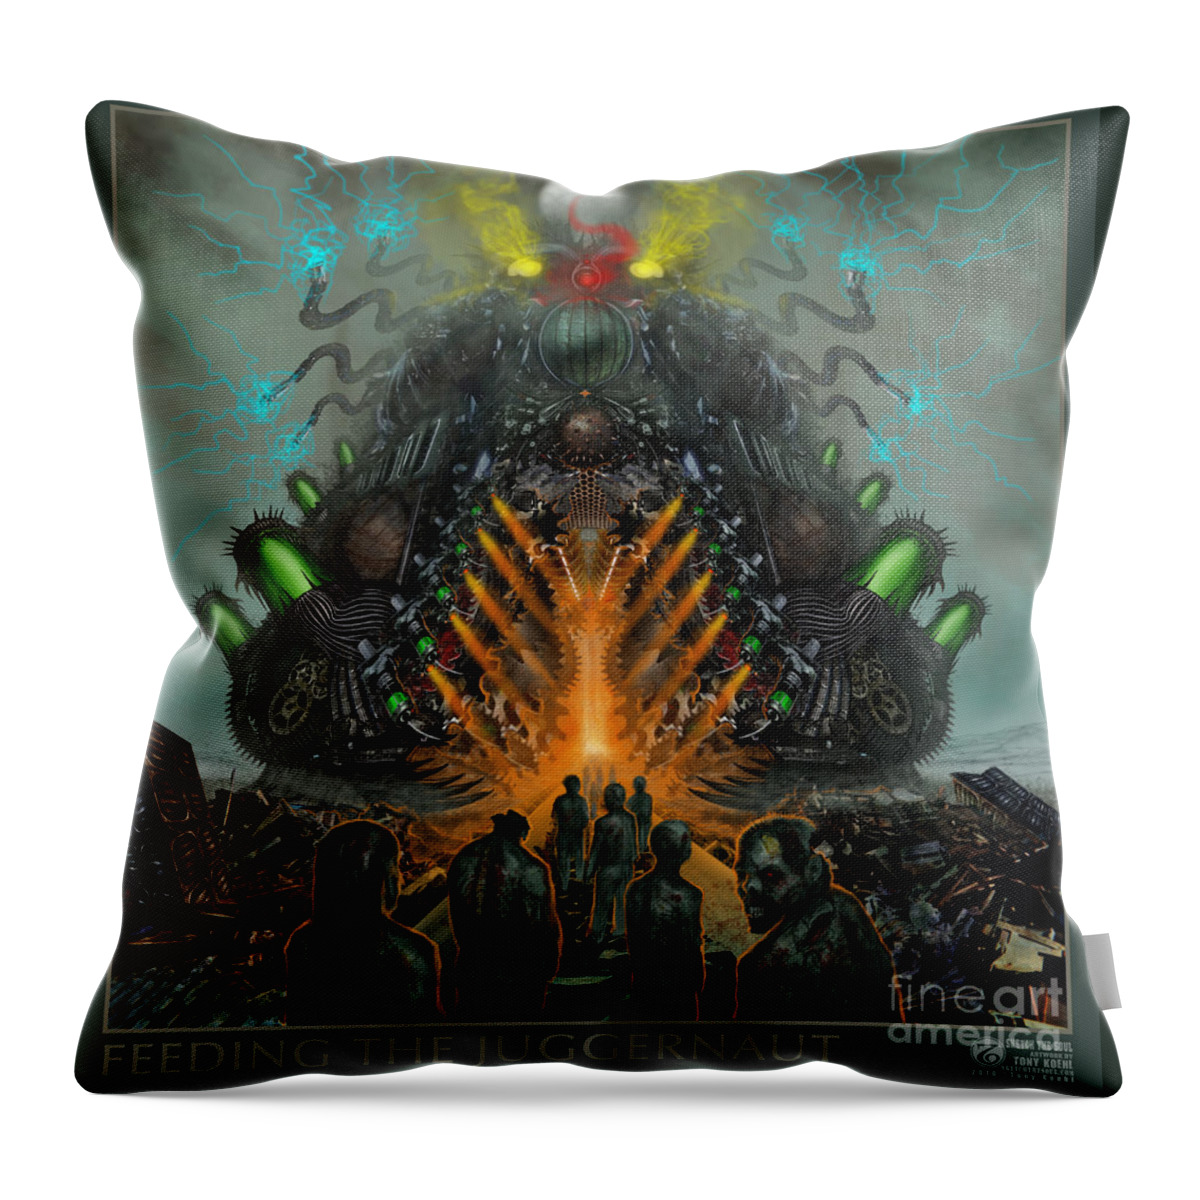 Death Metal Throw Pillow featuring the digital art Feeding the Juggernaut by Tony Koehl